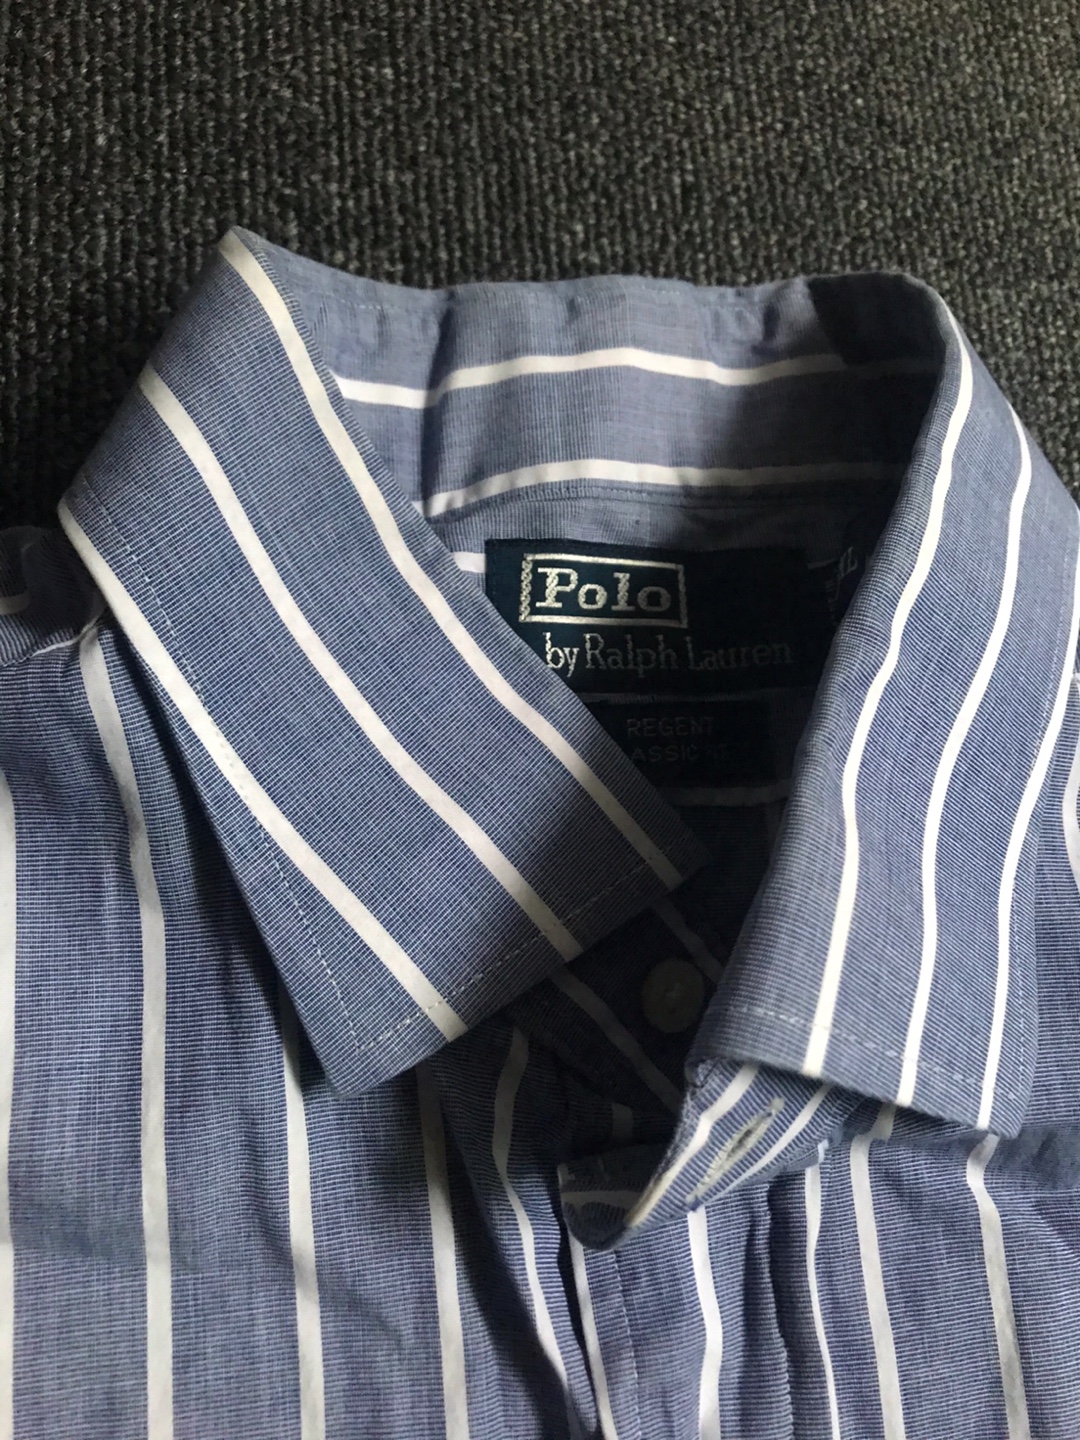 Polo RL regent classic fit stripe shirt (17/XL size, ~105 추천)